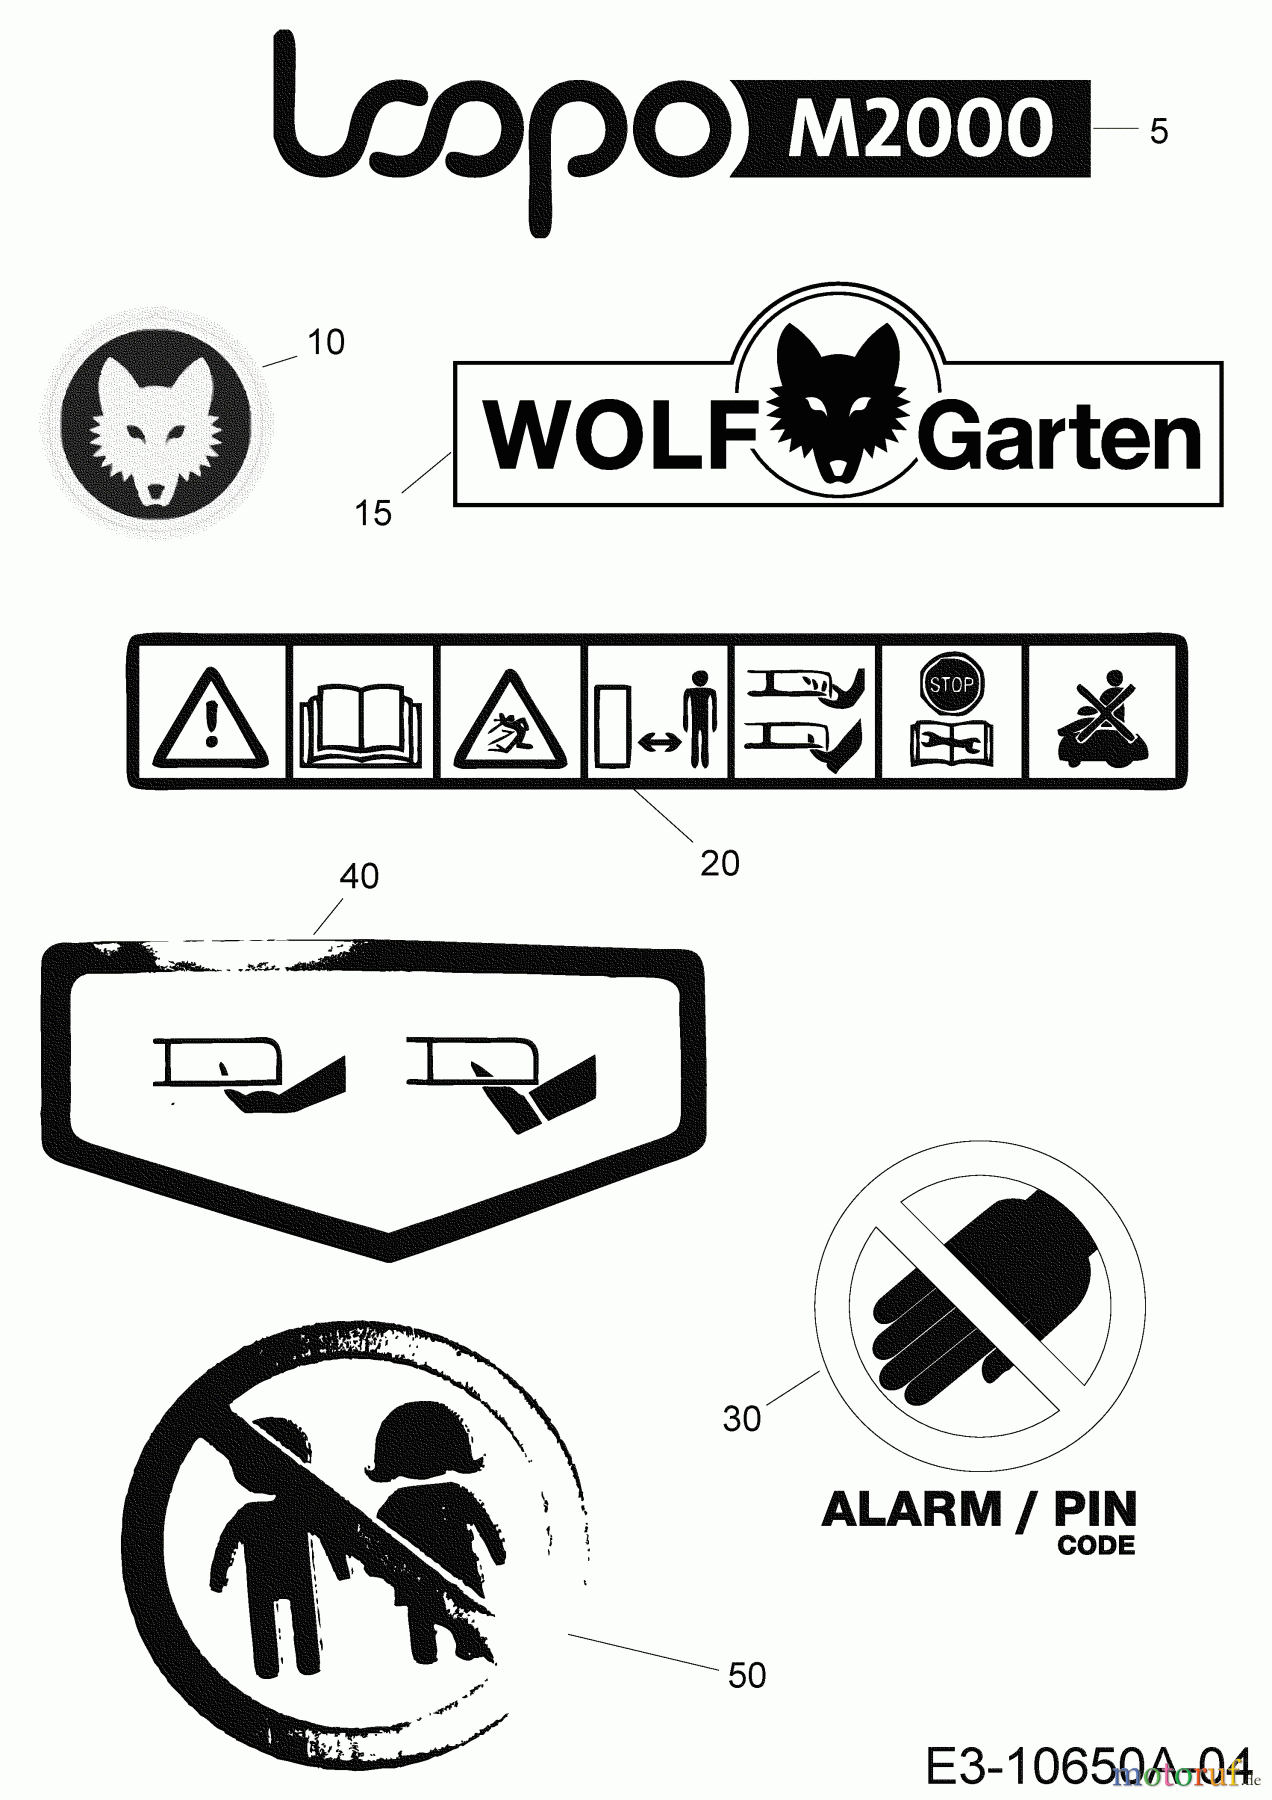  Wolf-Garten Robotic lawn mower Loopo M2000 22CCFAEA650 (2020) Labels